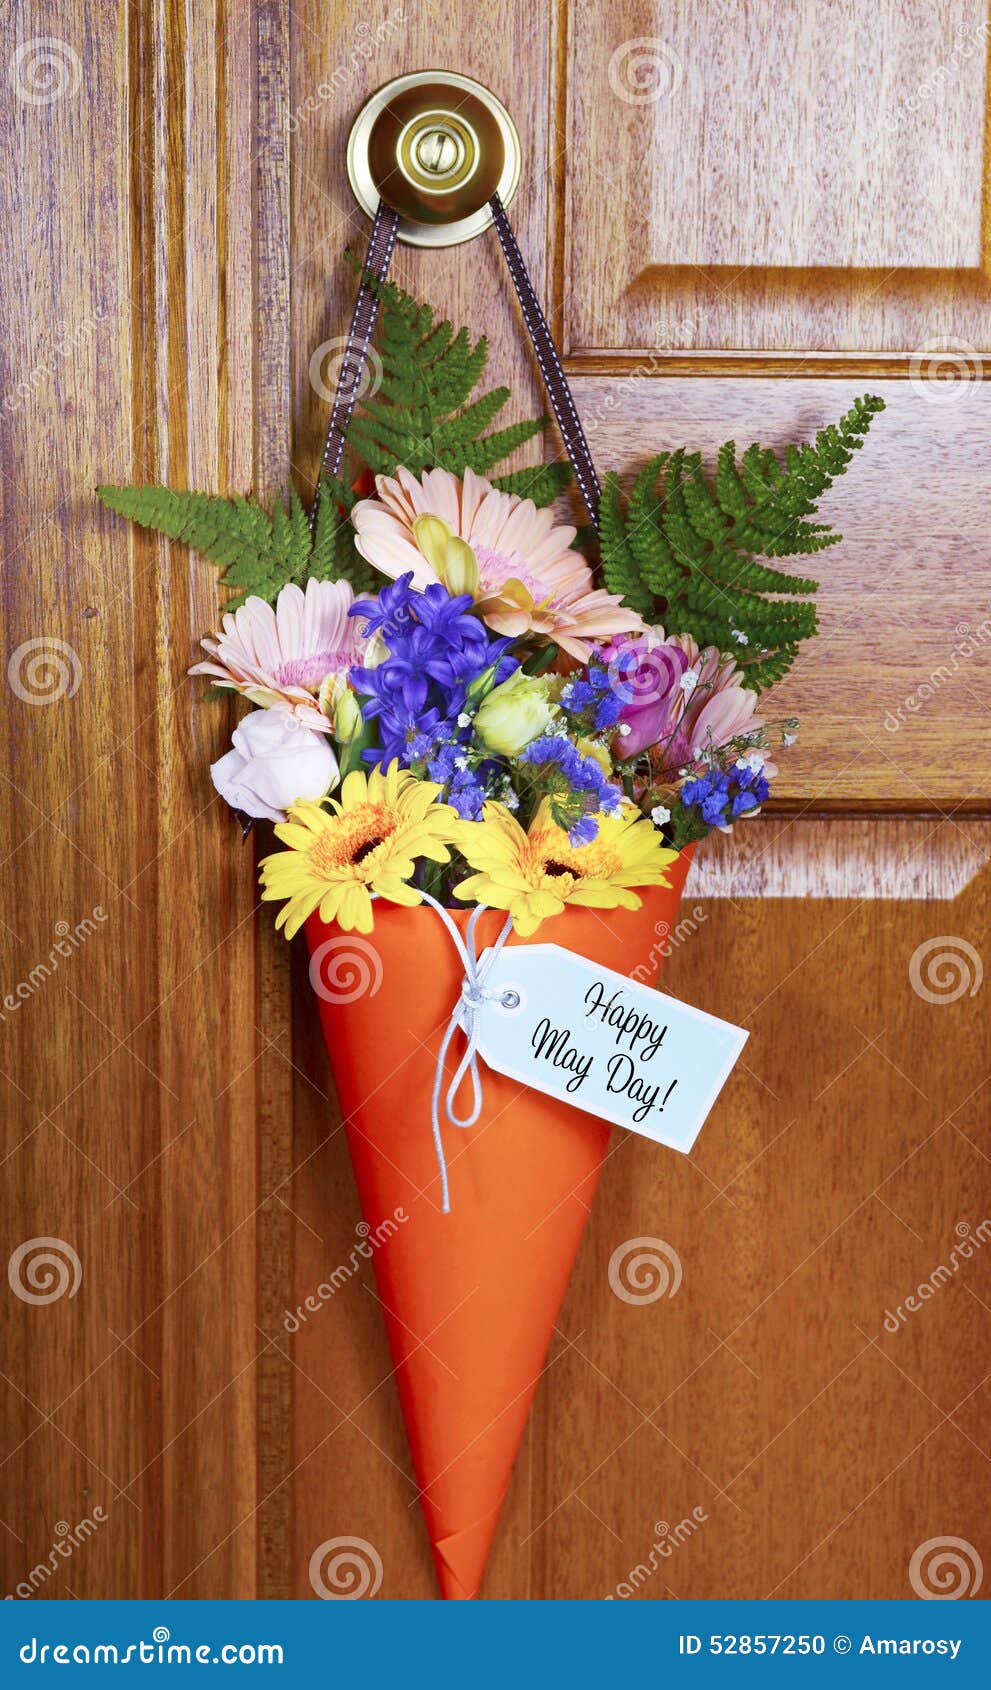 happy may day gift of flowers on door.